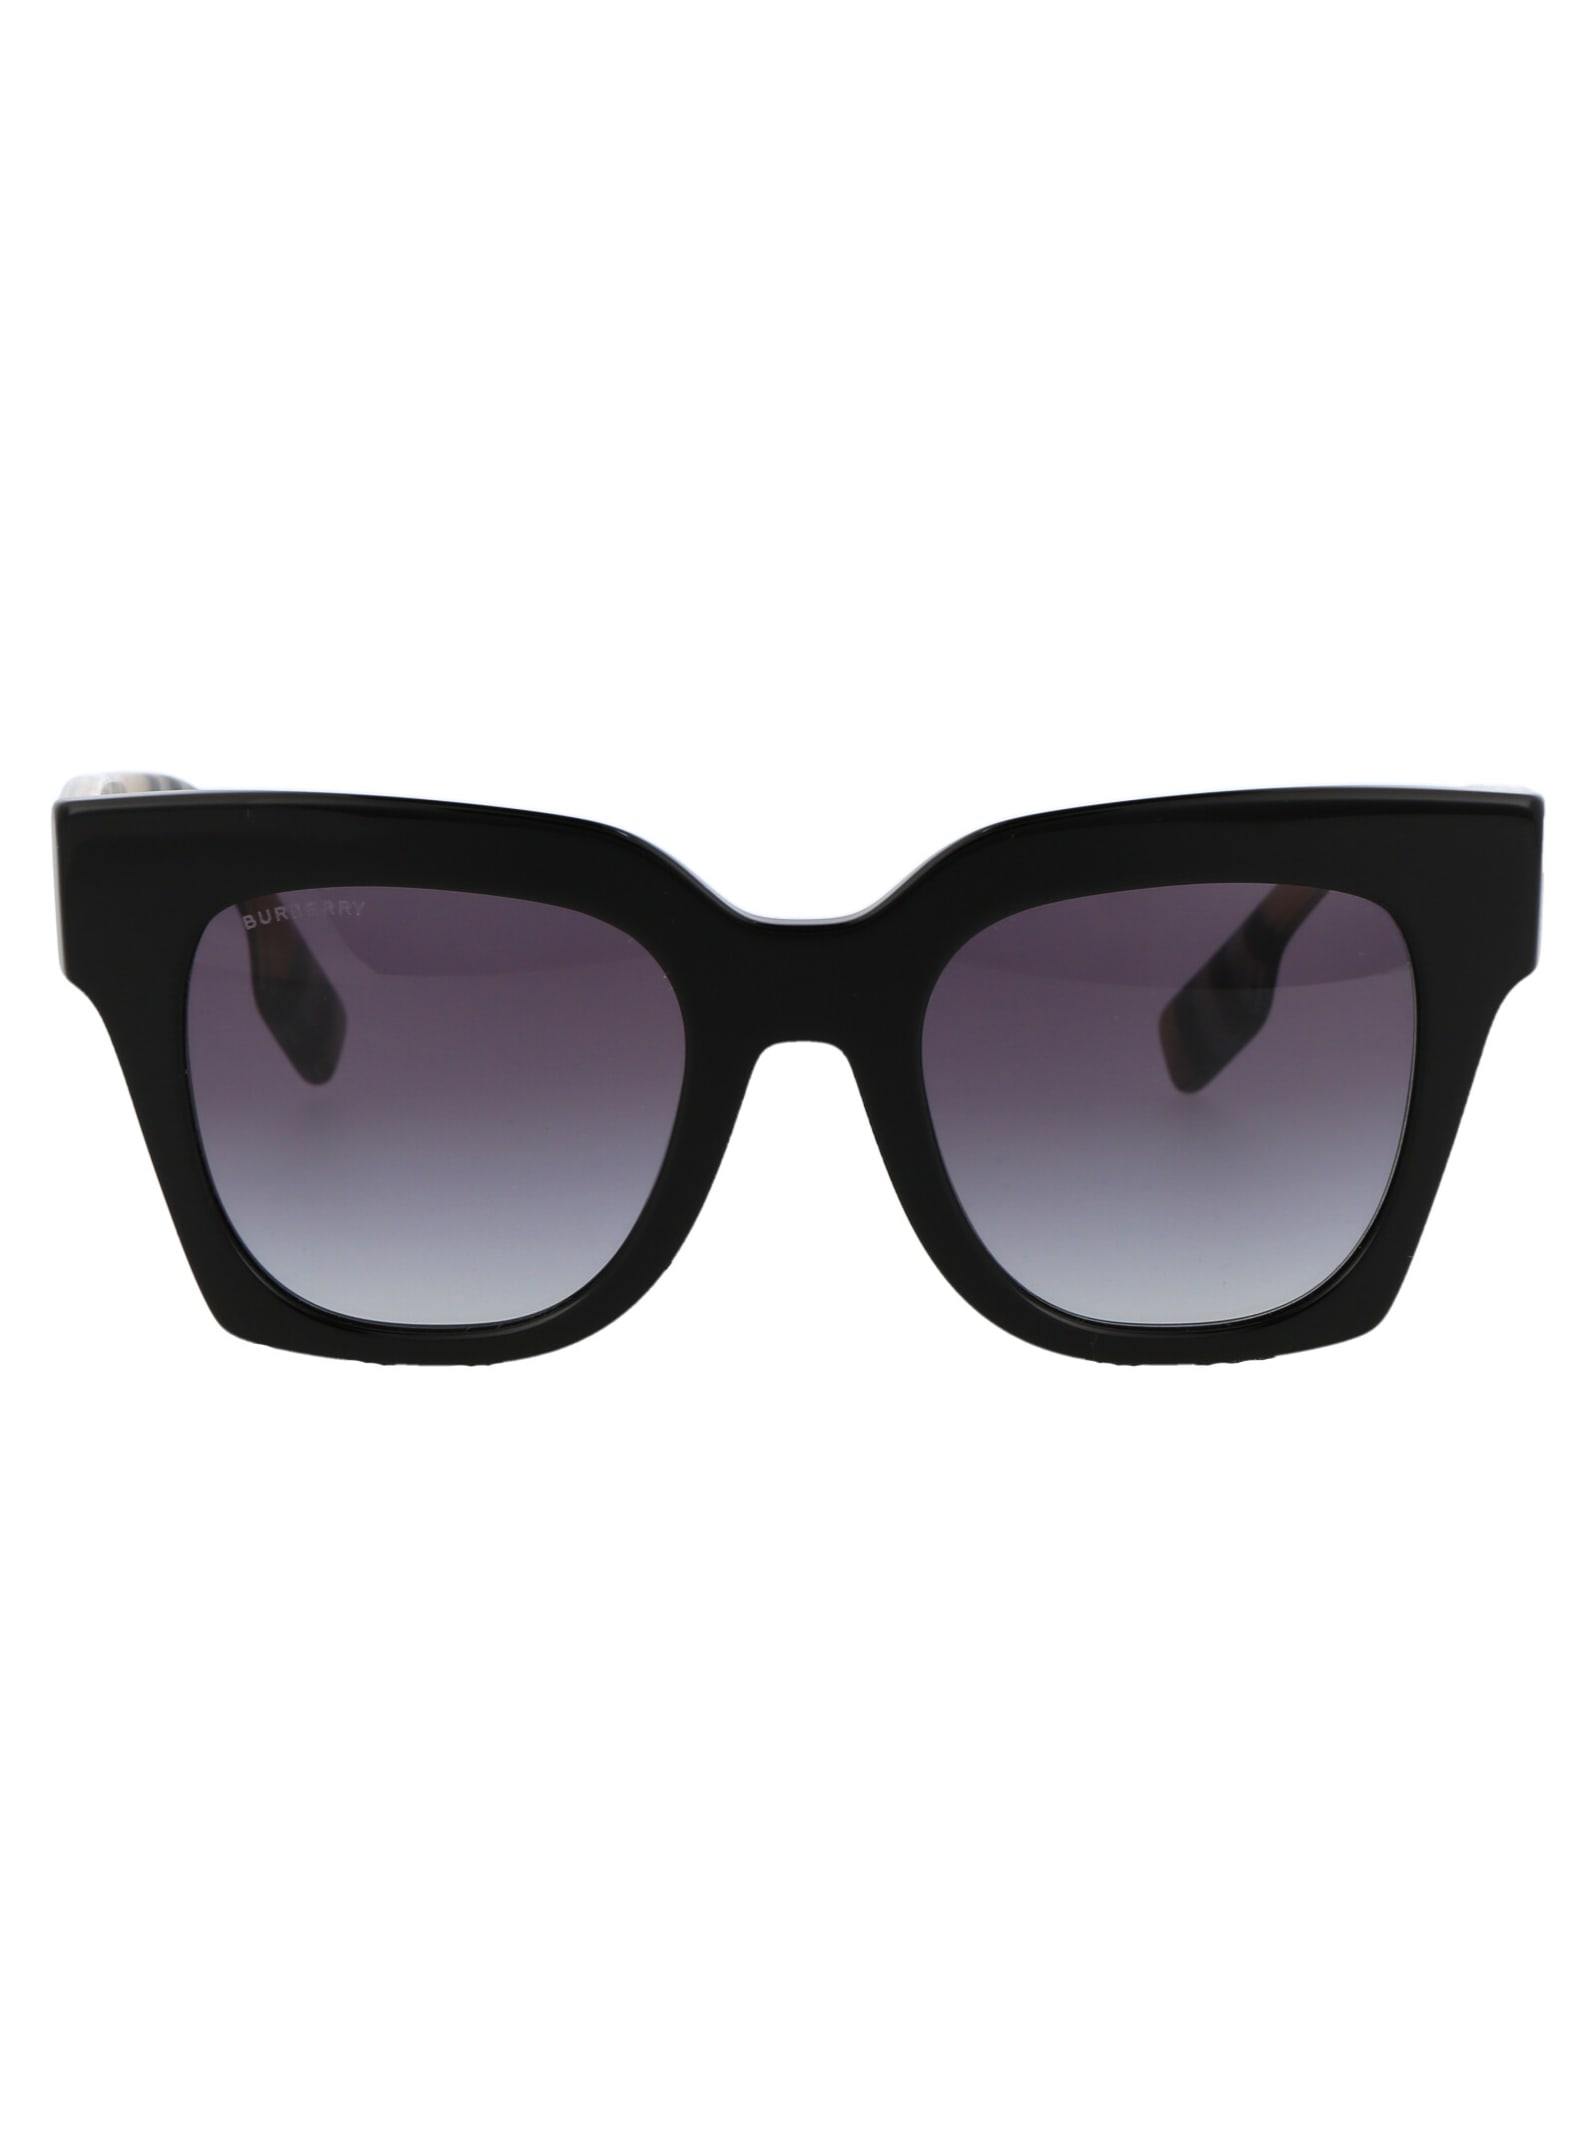 Burberry Eyewear Kitty Sunglasses